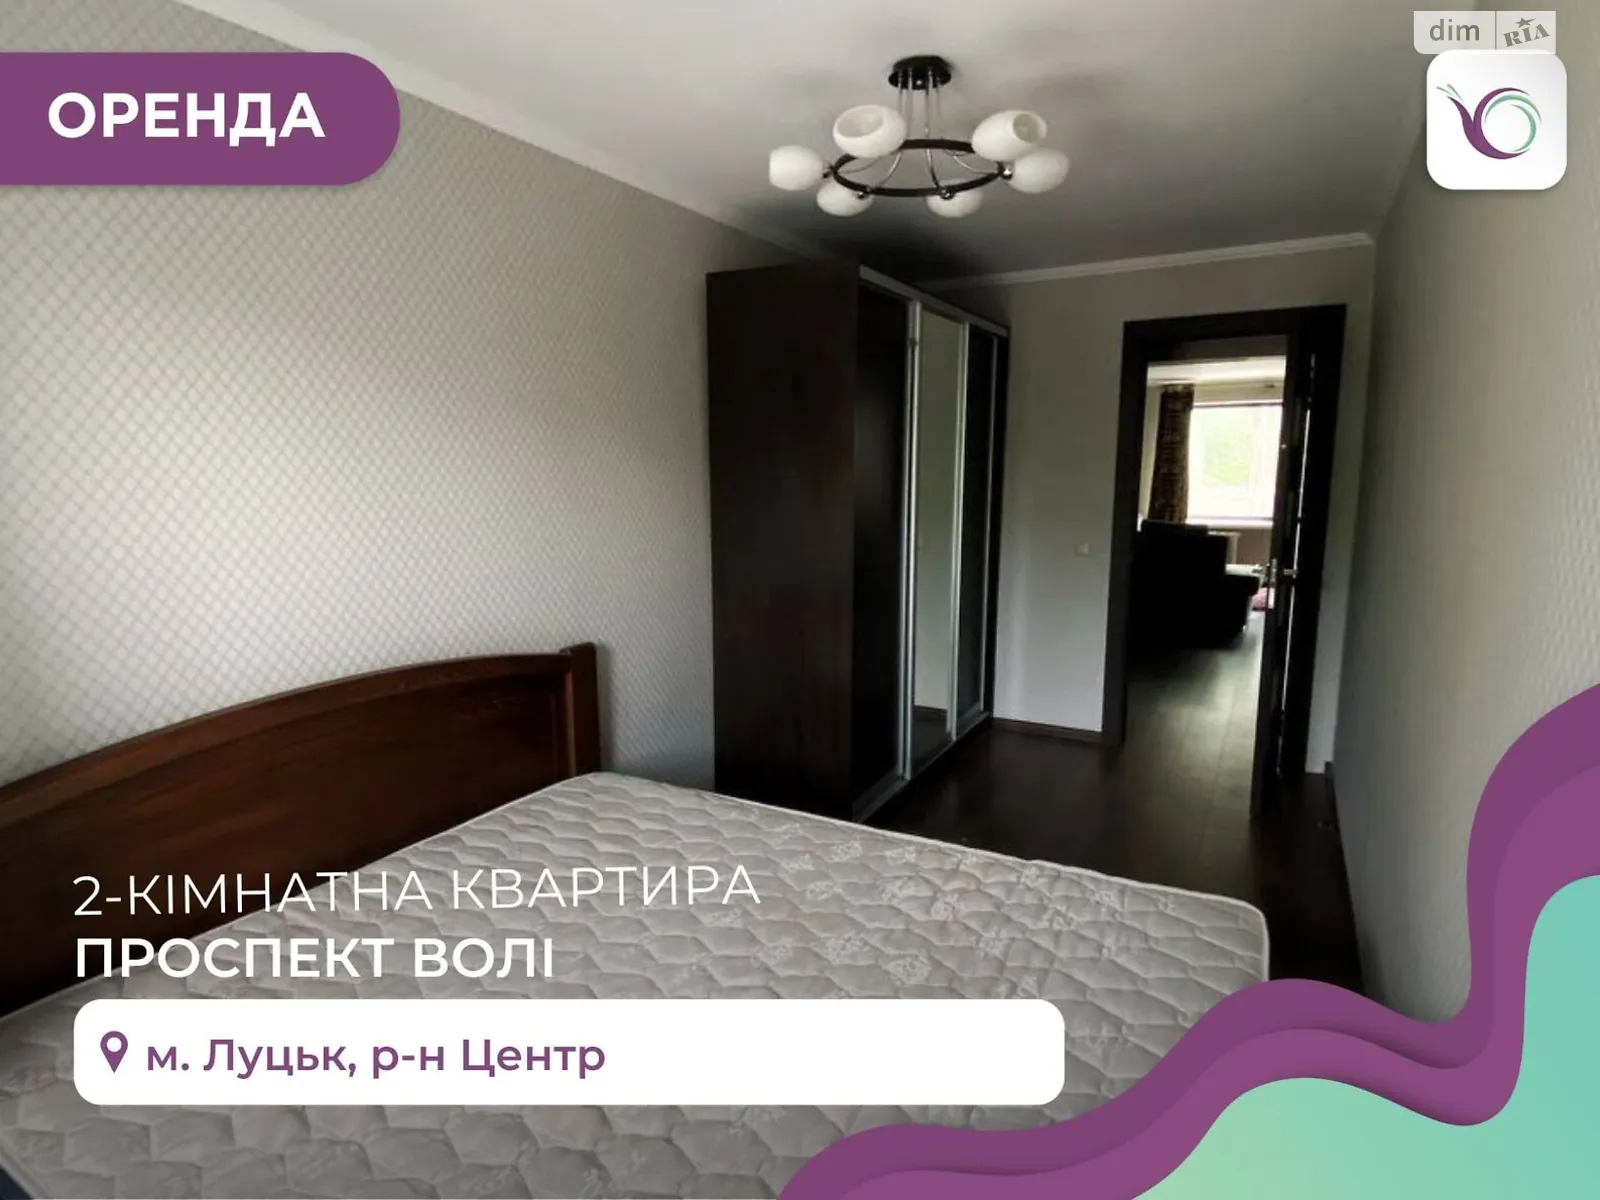 2-кімнатна квартира 42.4 кв. м у Луцьку, цена: 14000 грн